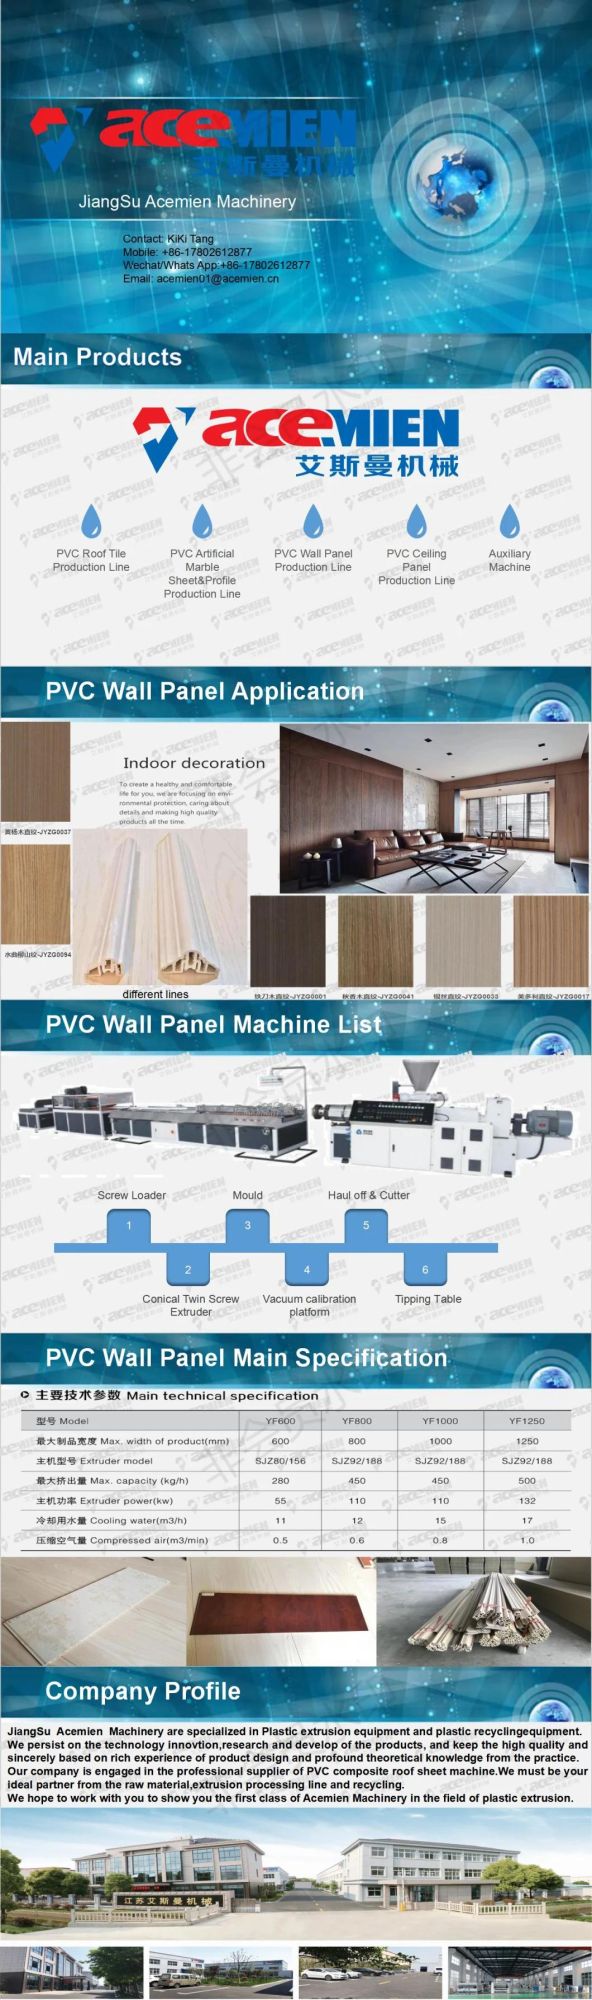 New Design Plastic PVC Wood Color Wall Panel Making Machine/Production Line